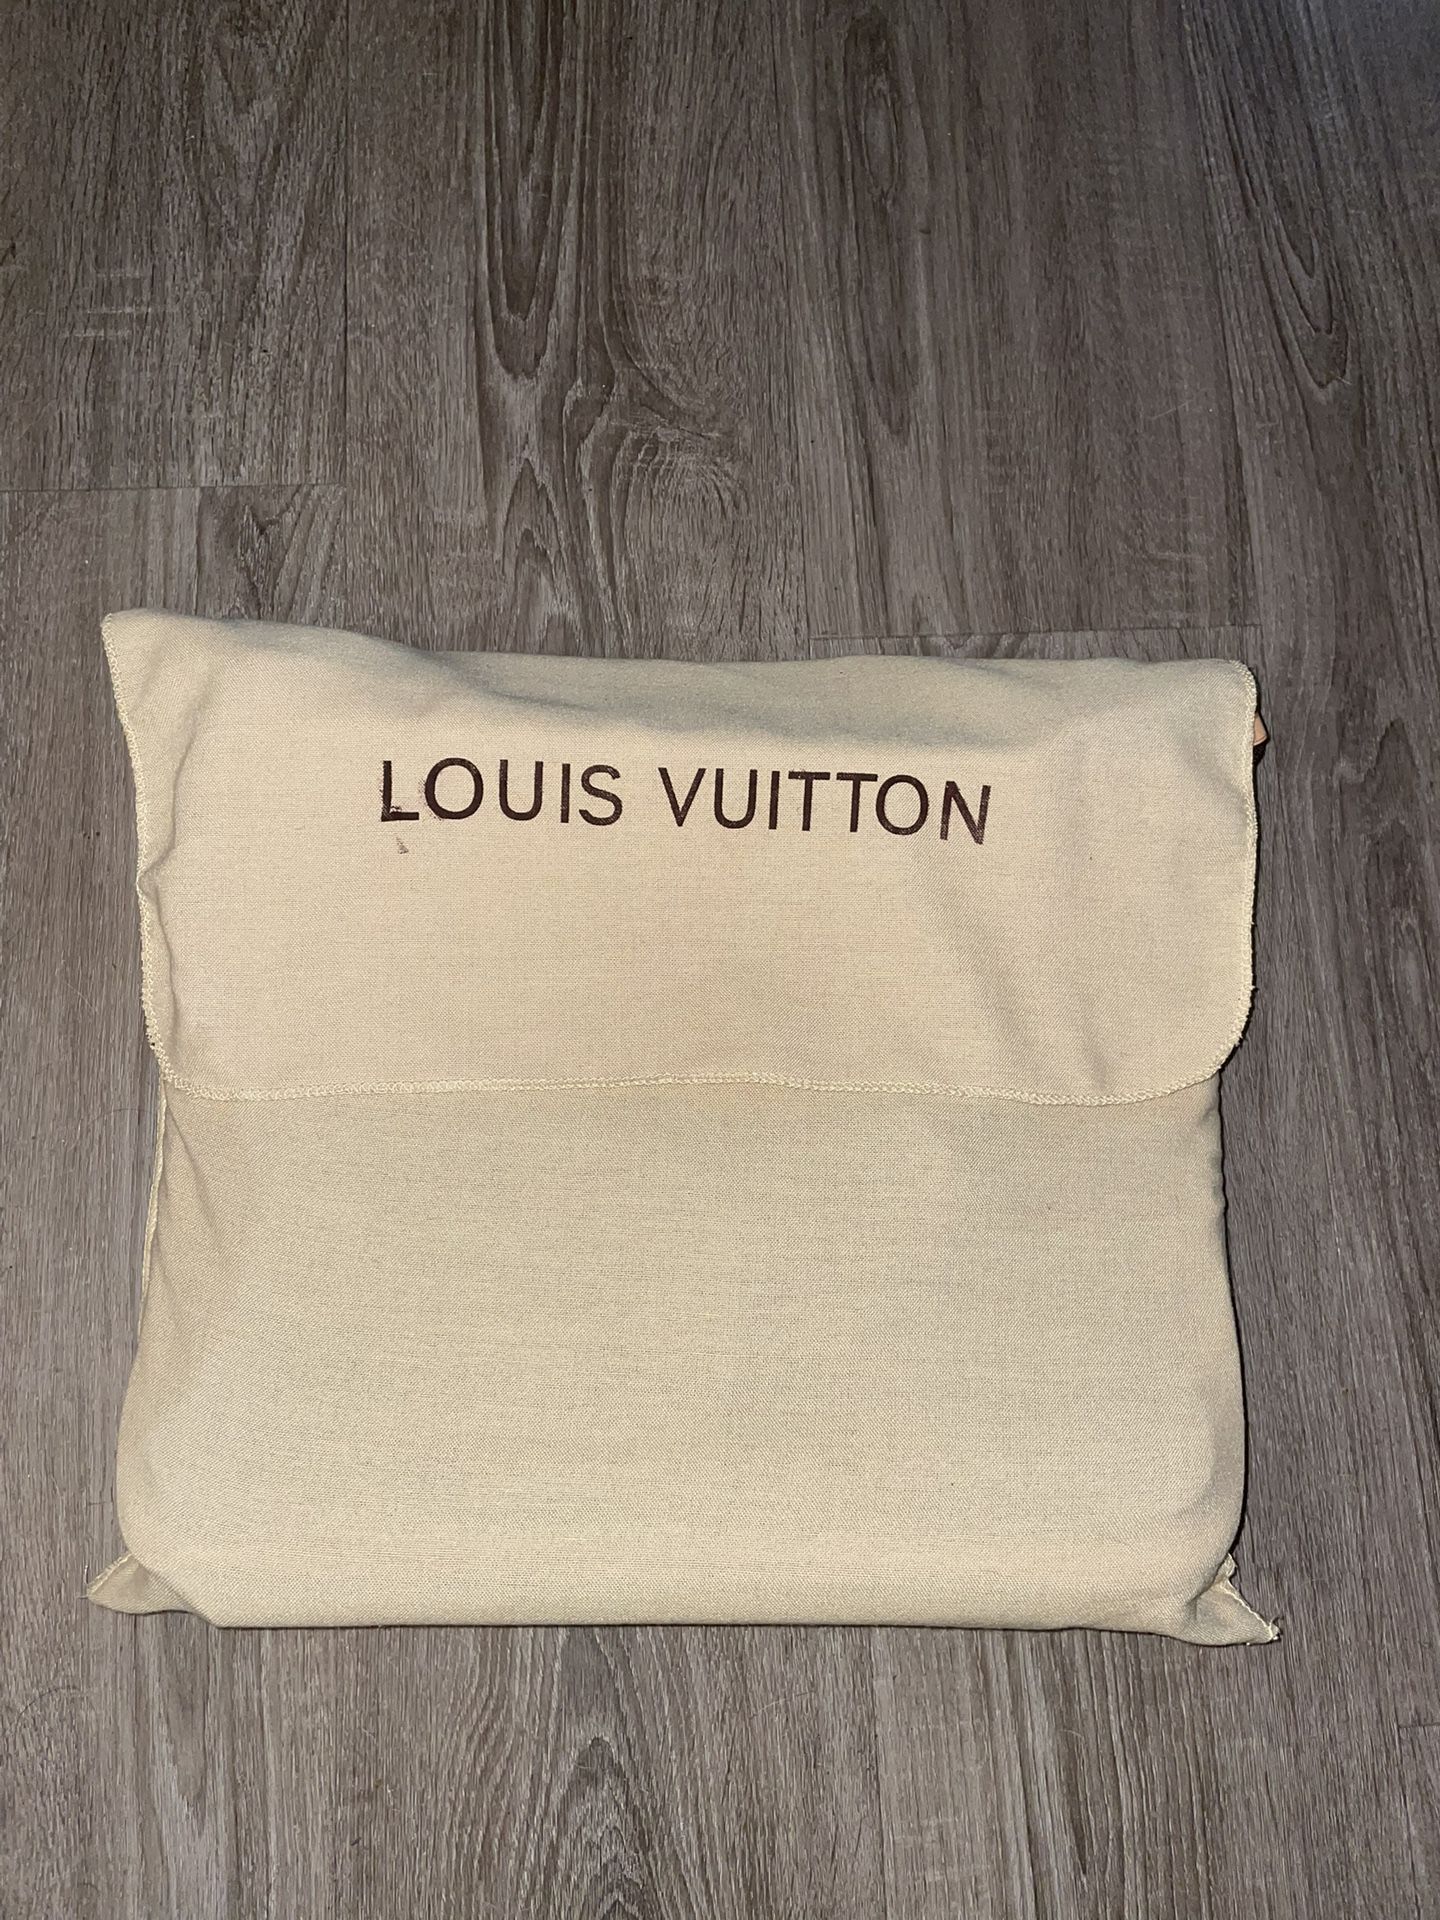 Louis Vuitton damier cobalt race messanger bag for Sale in Downey, CA -  OfferUp